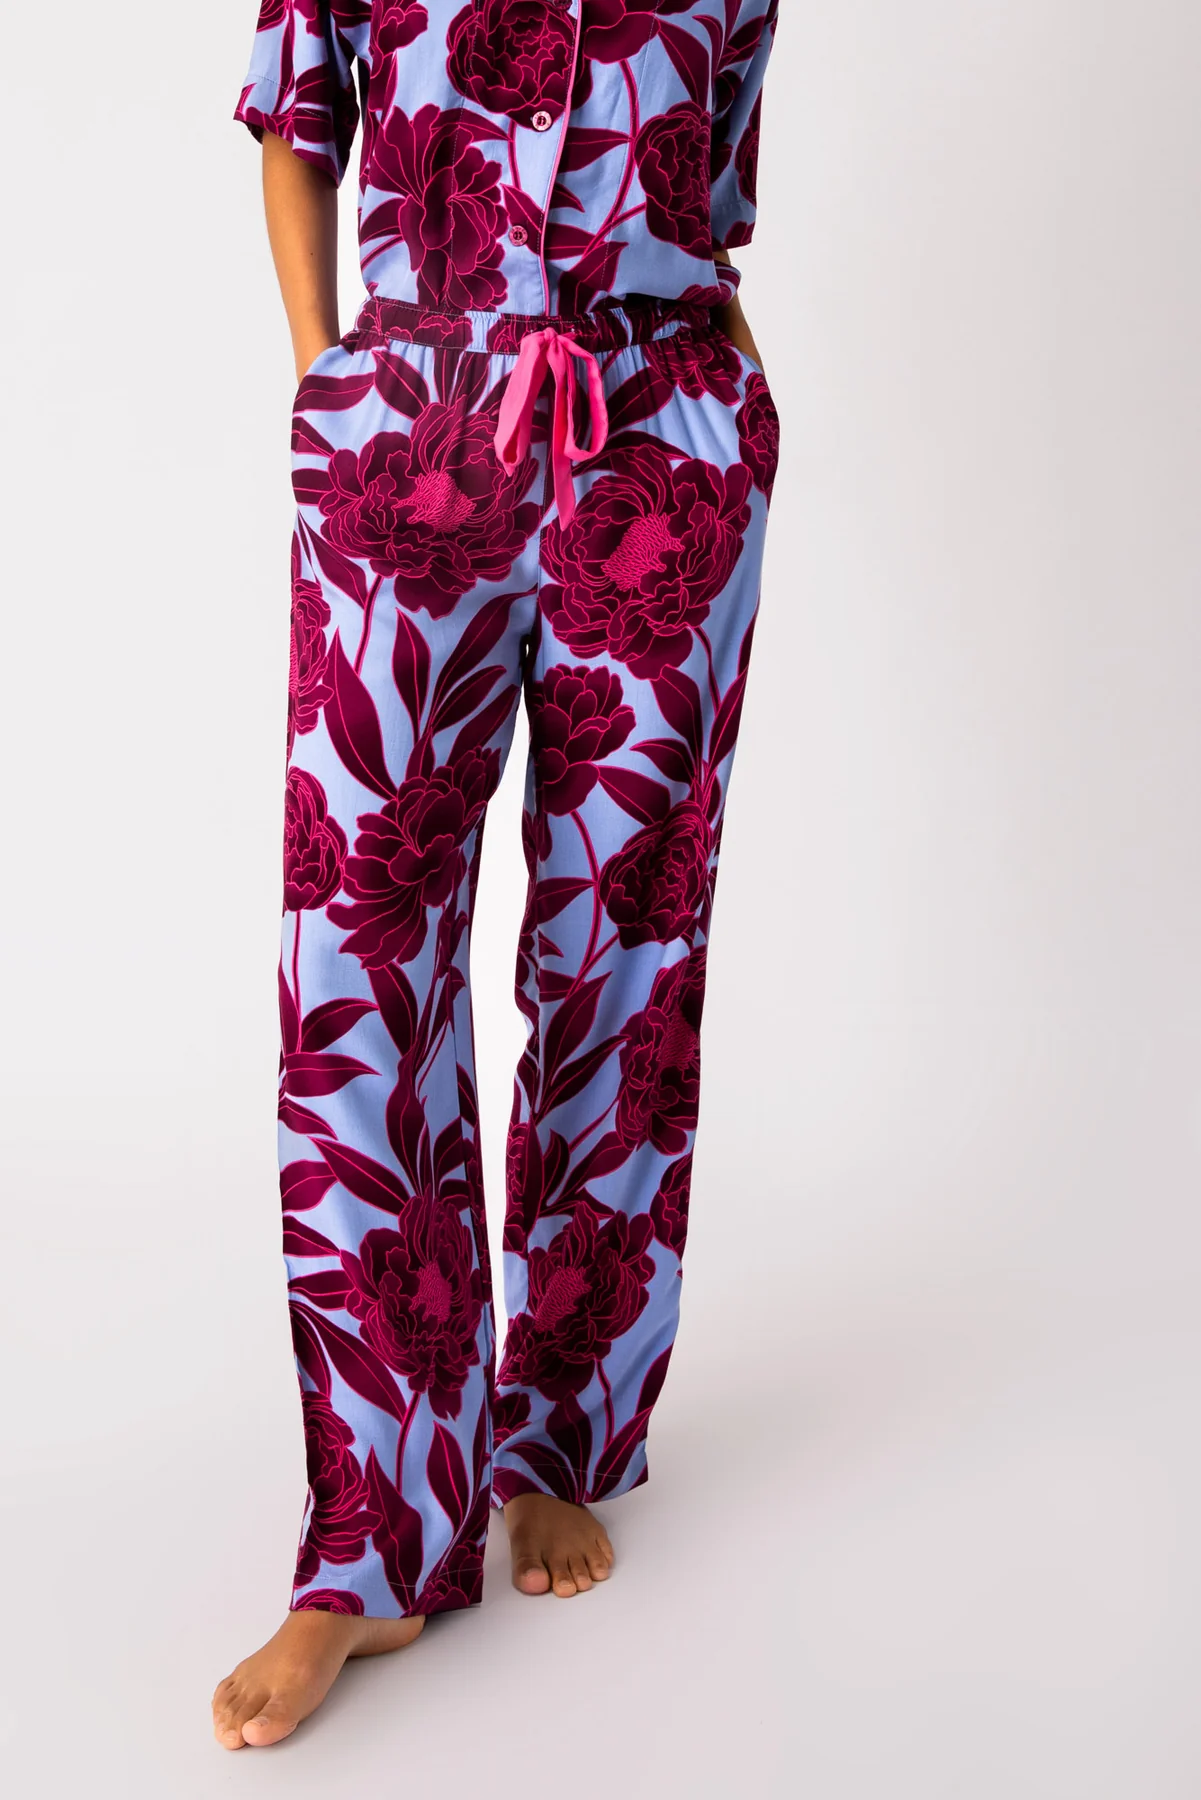 Zara, Pants & Jumpsuits, Zara Red Plaid Leggings Size Medium